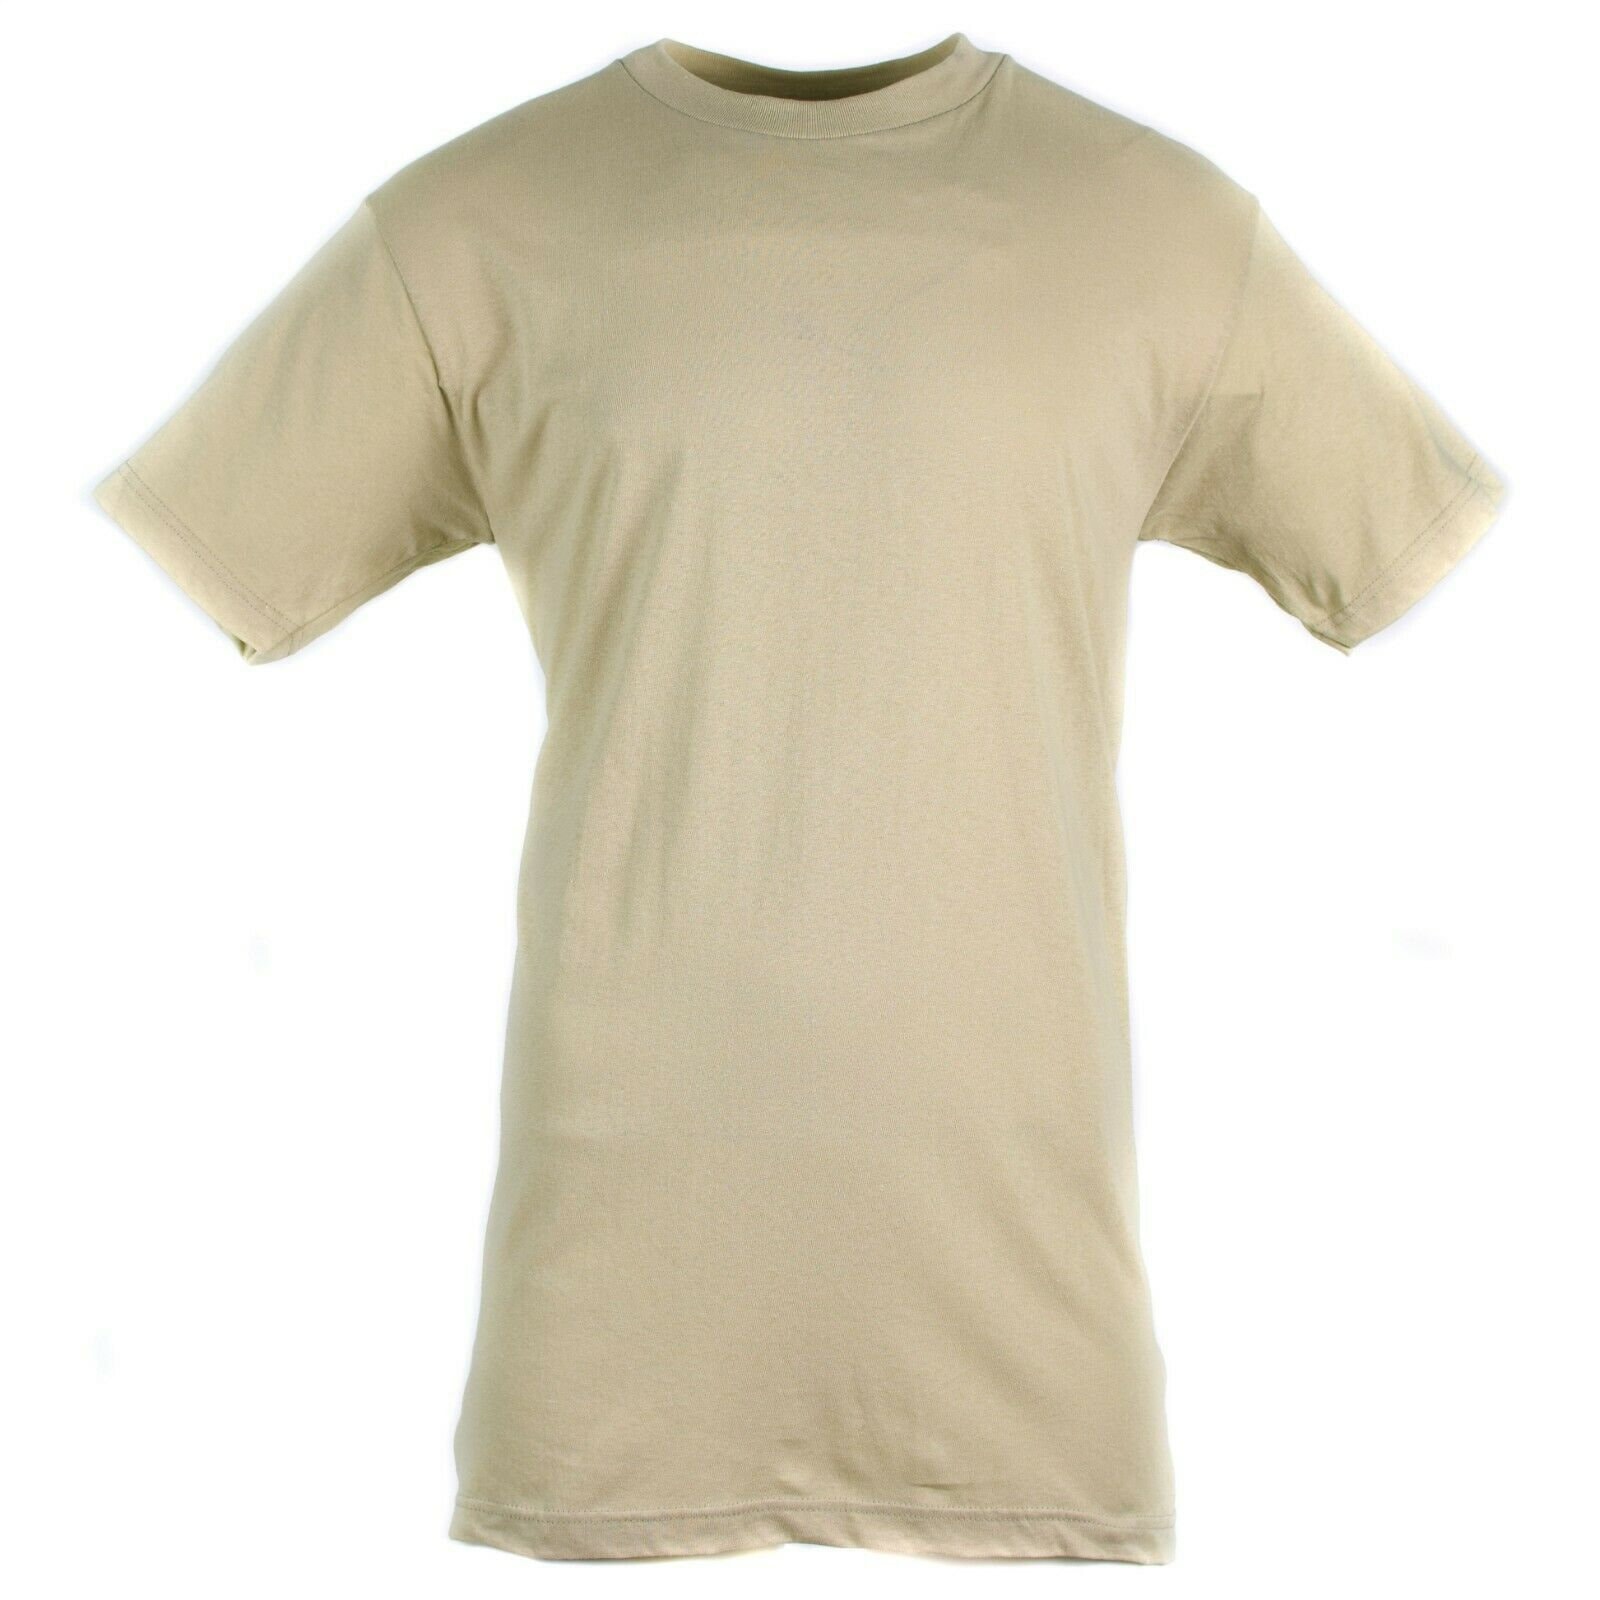 Campbellsville Genuine US Army Military Surplus Desert USGI Cotton T-Shirt M 